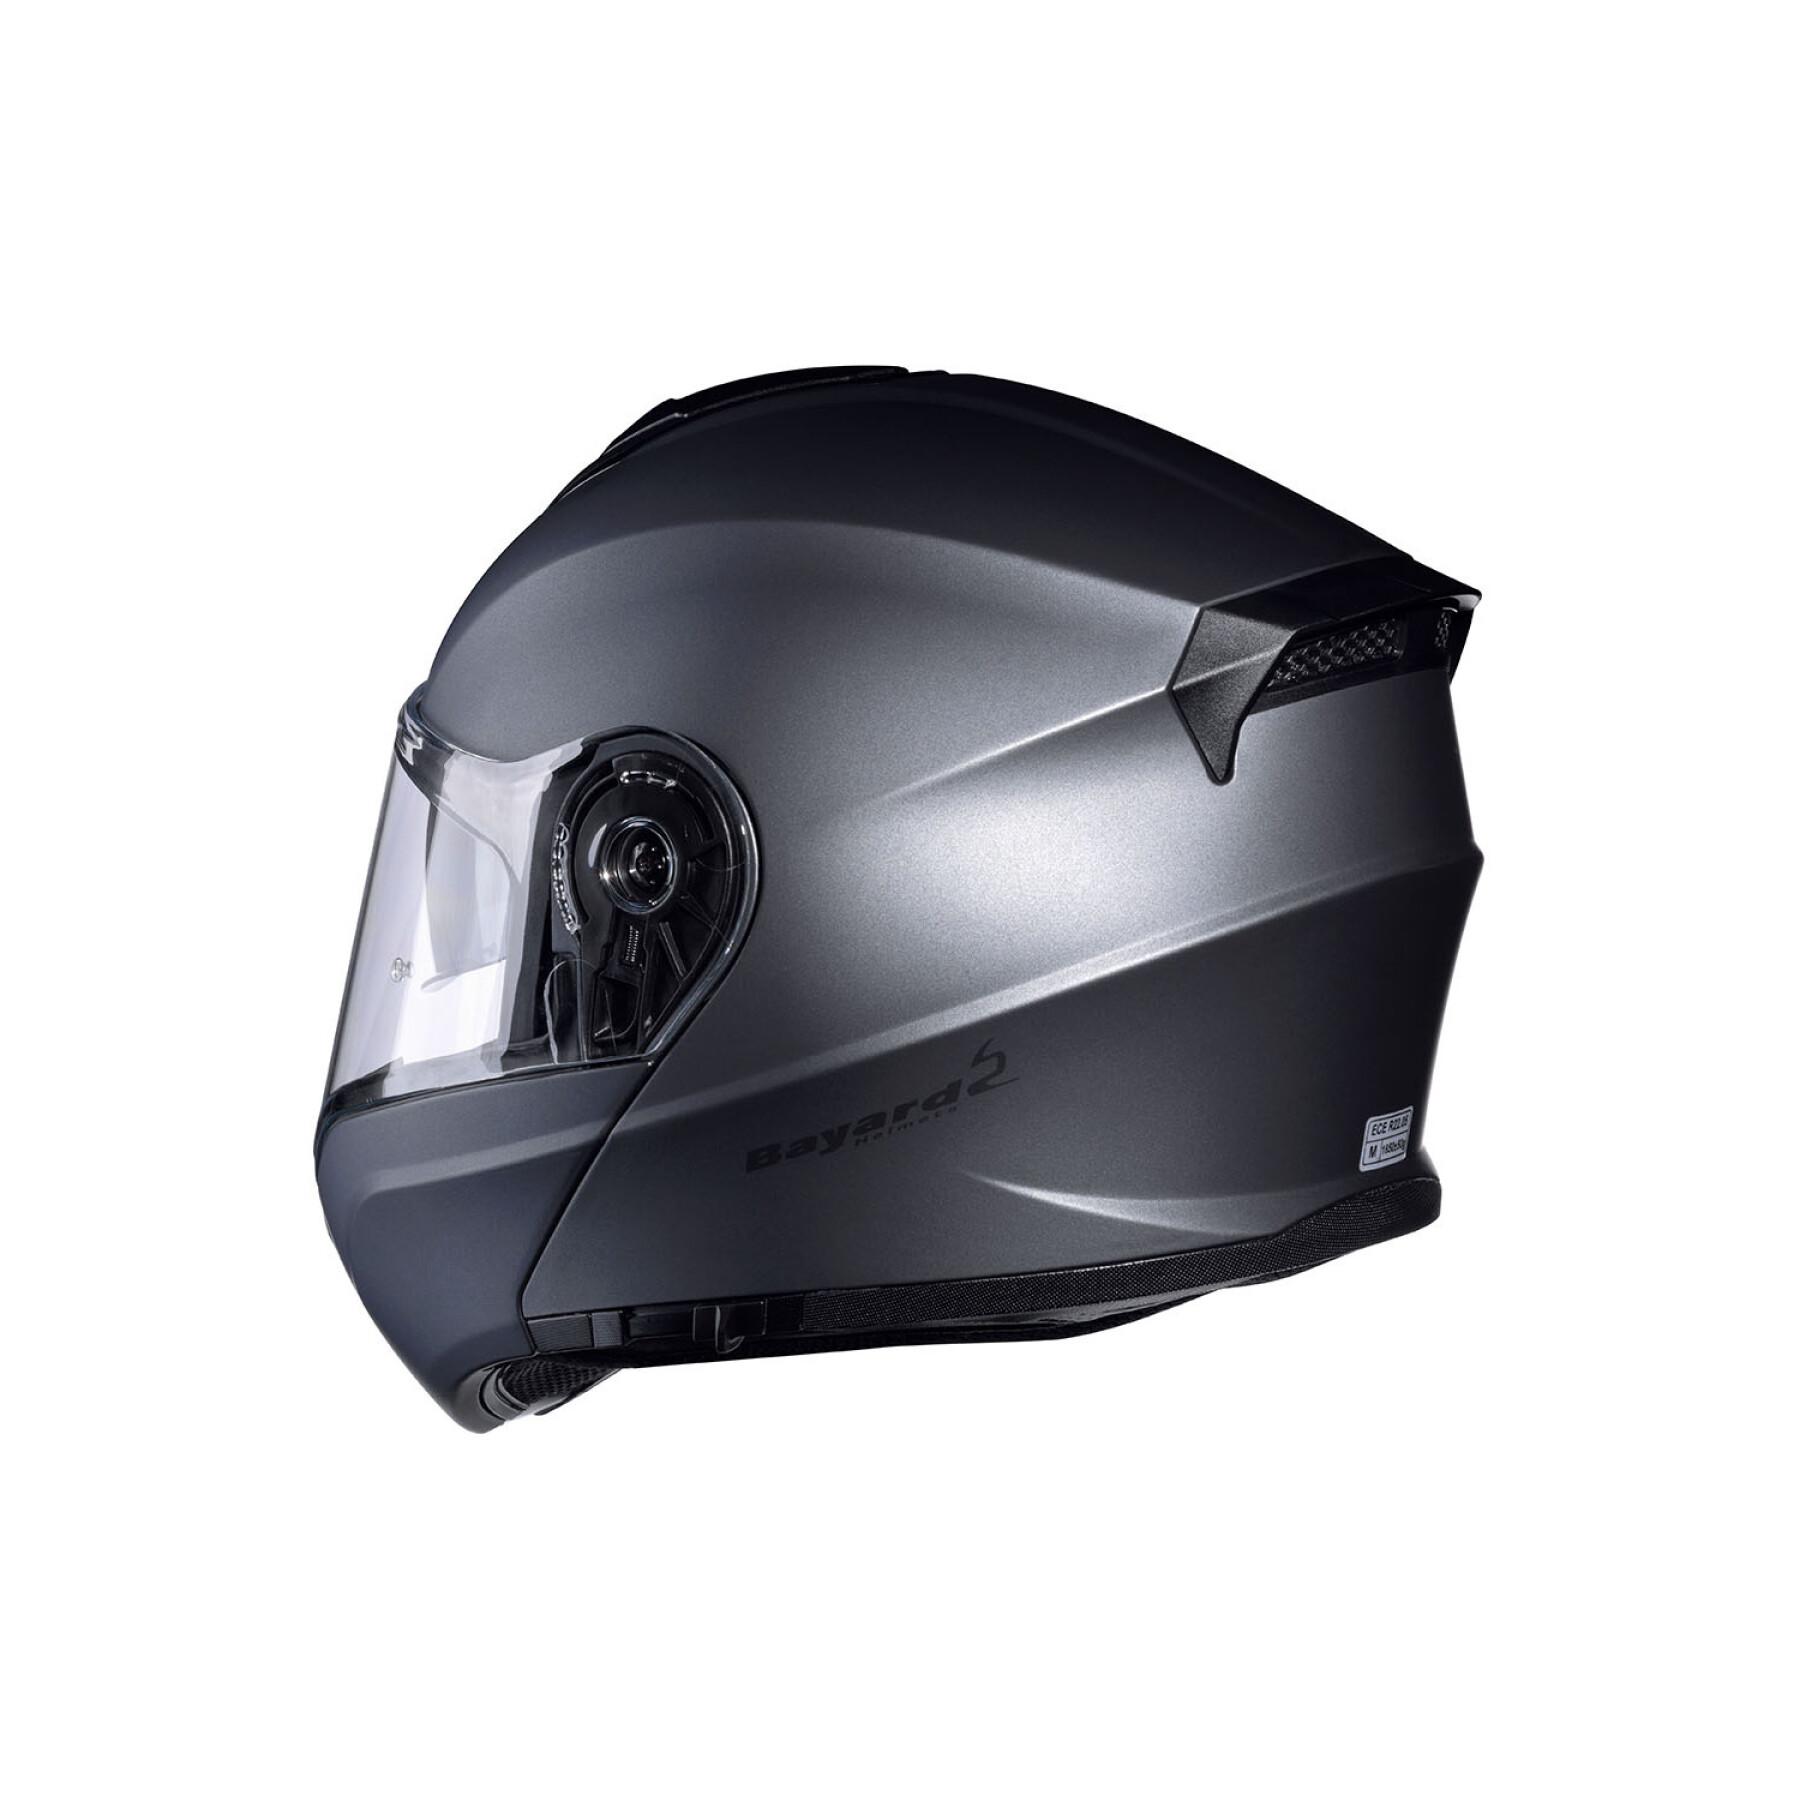 Modular motorcycle helmet Bayard fp-24 s orion